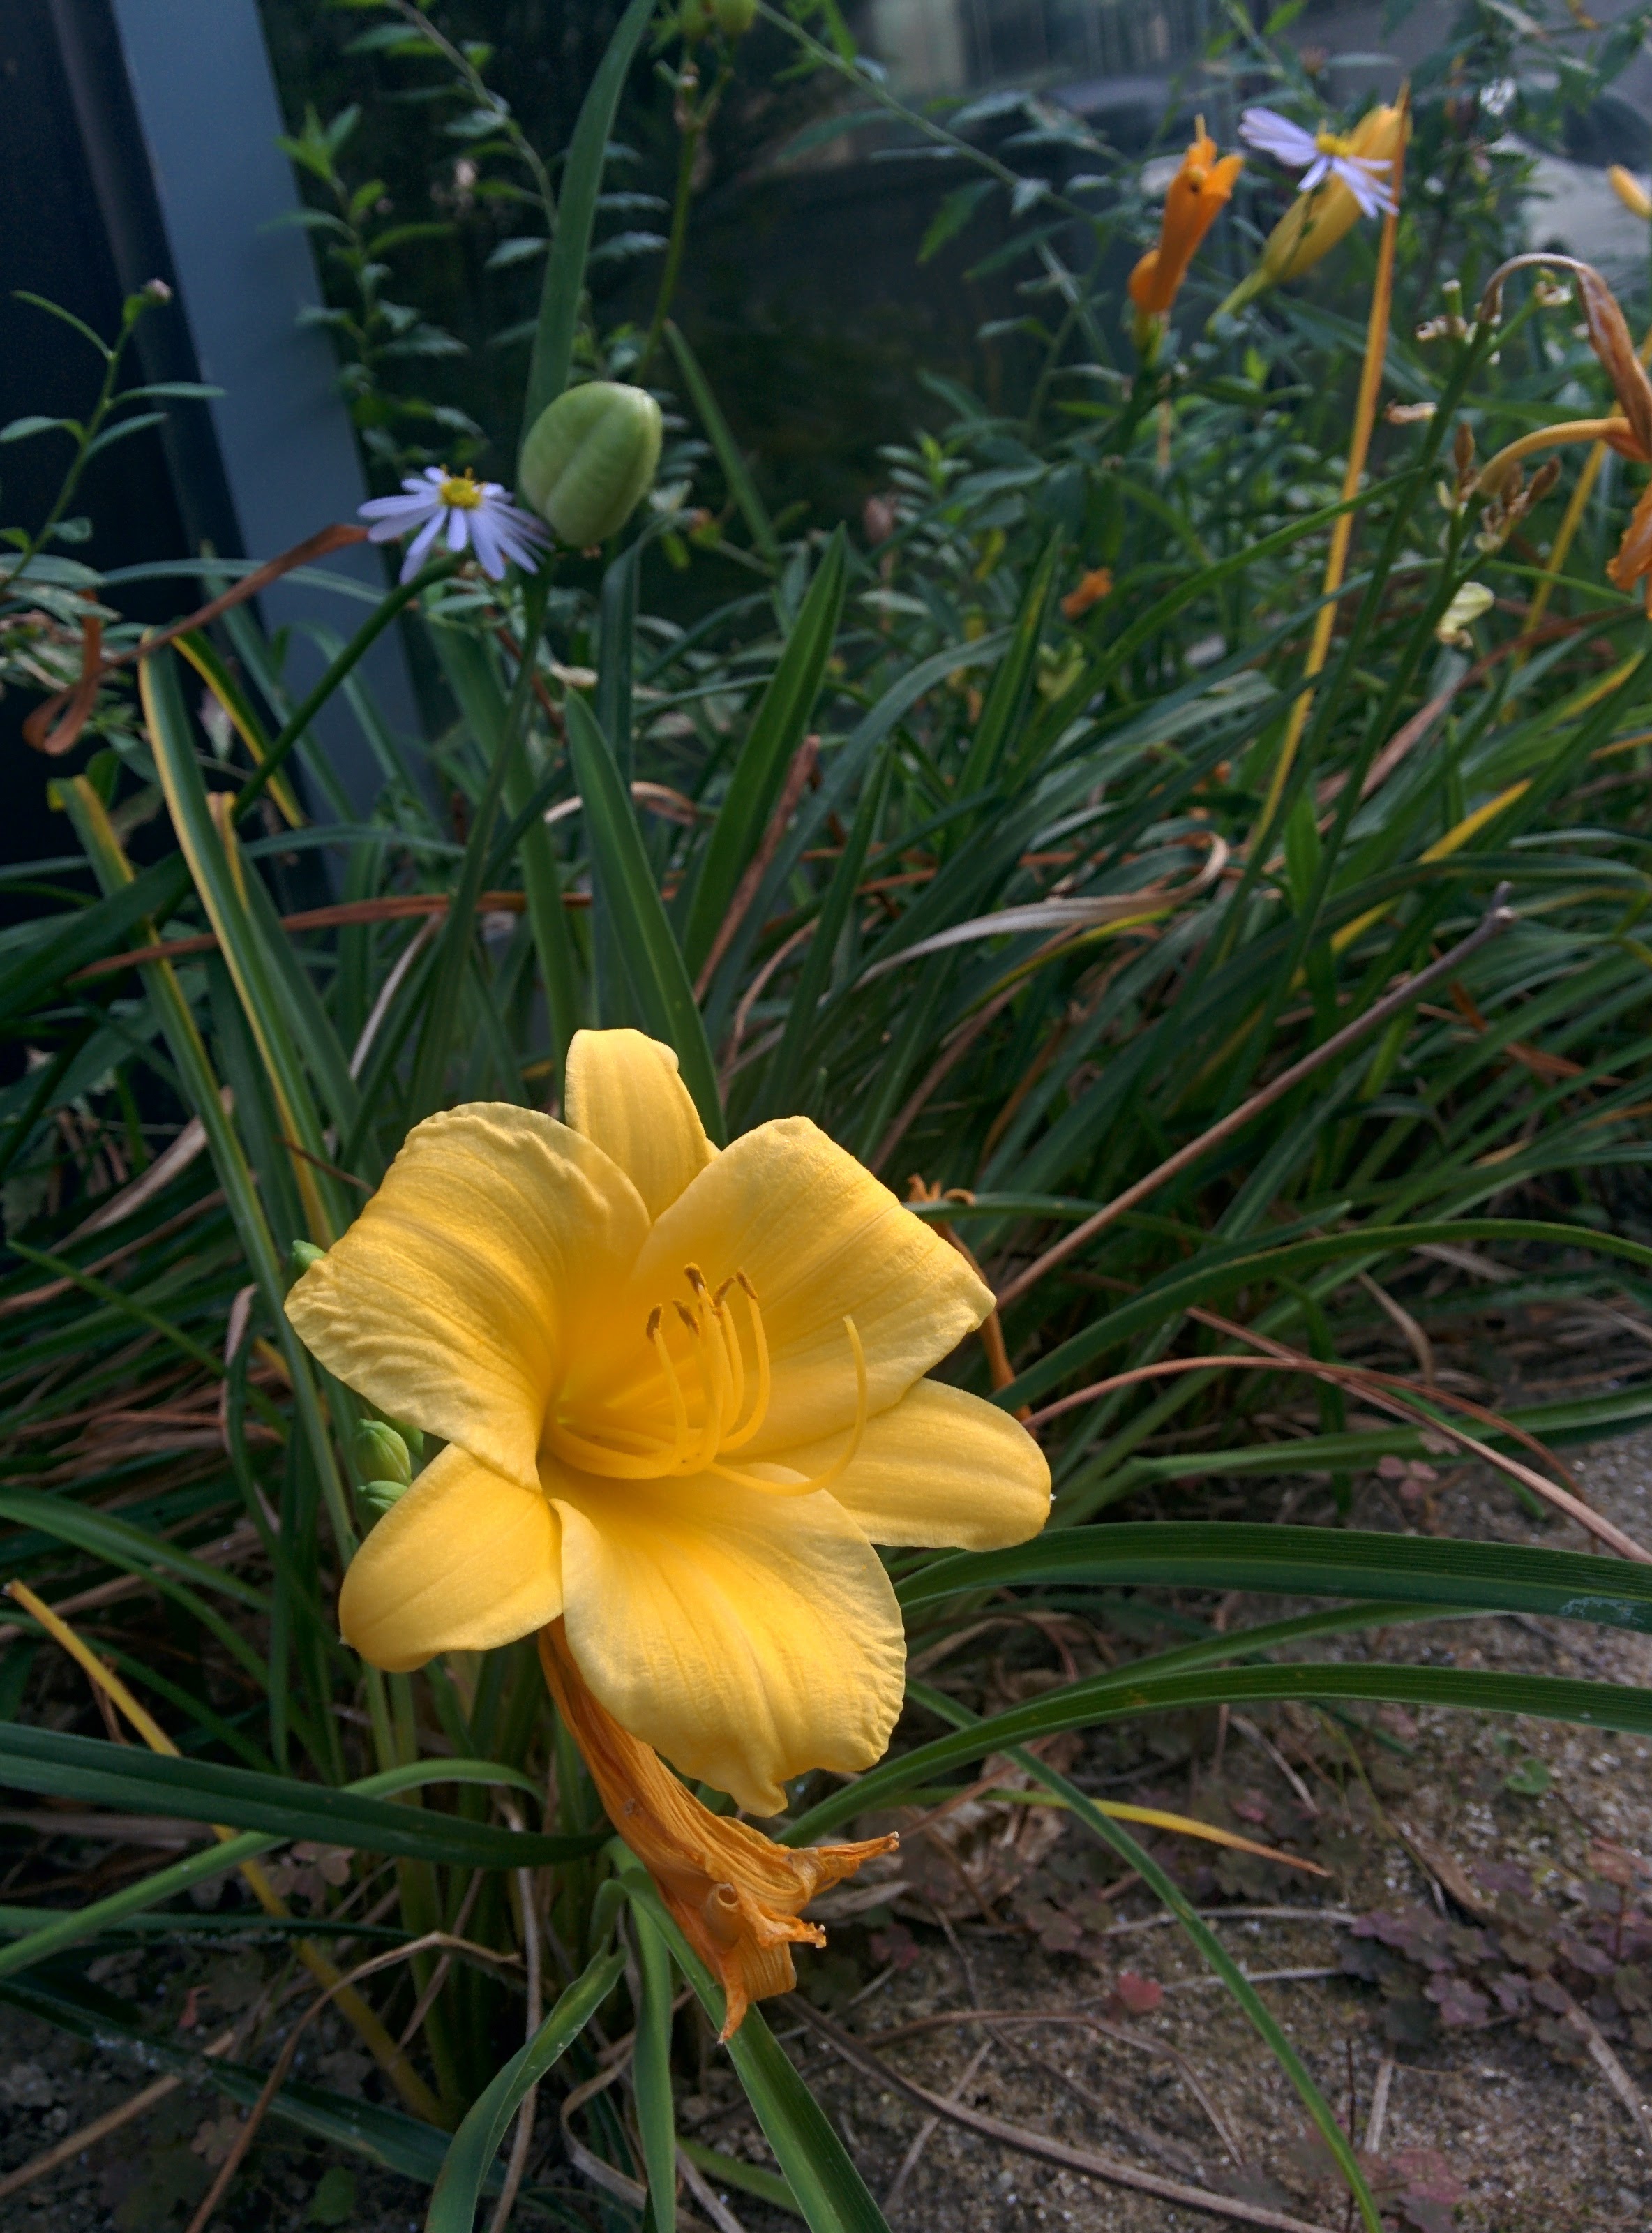 IMG_20151006_165308.jpg 나리를 닮은 노란색 각시원추리 꽃과 열매